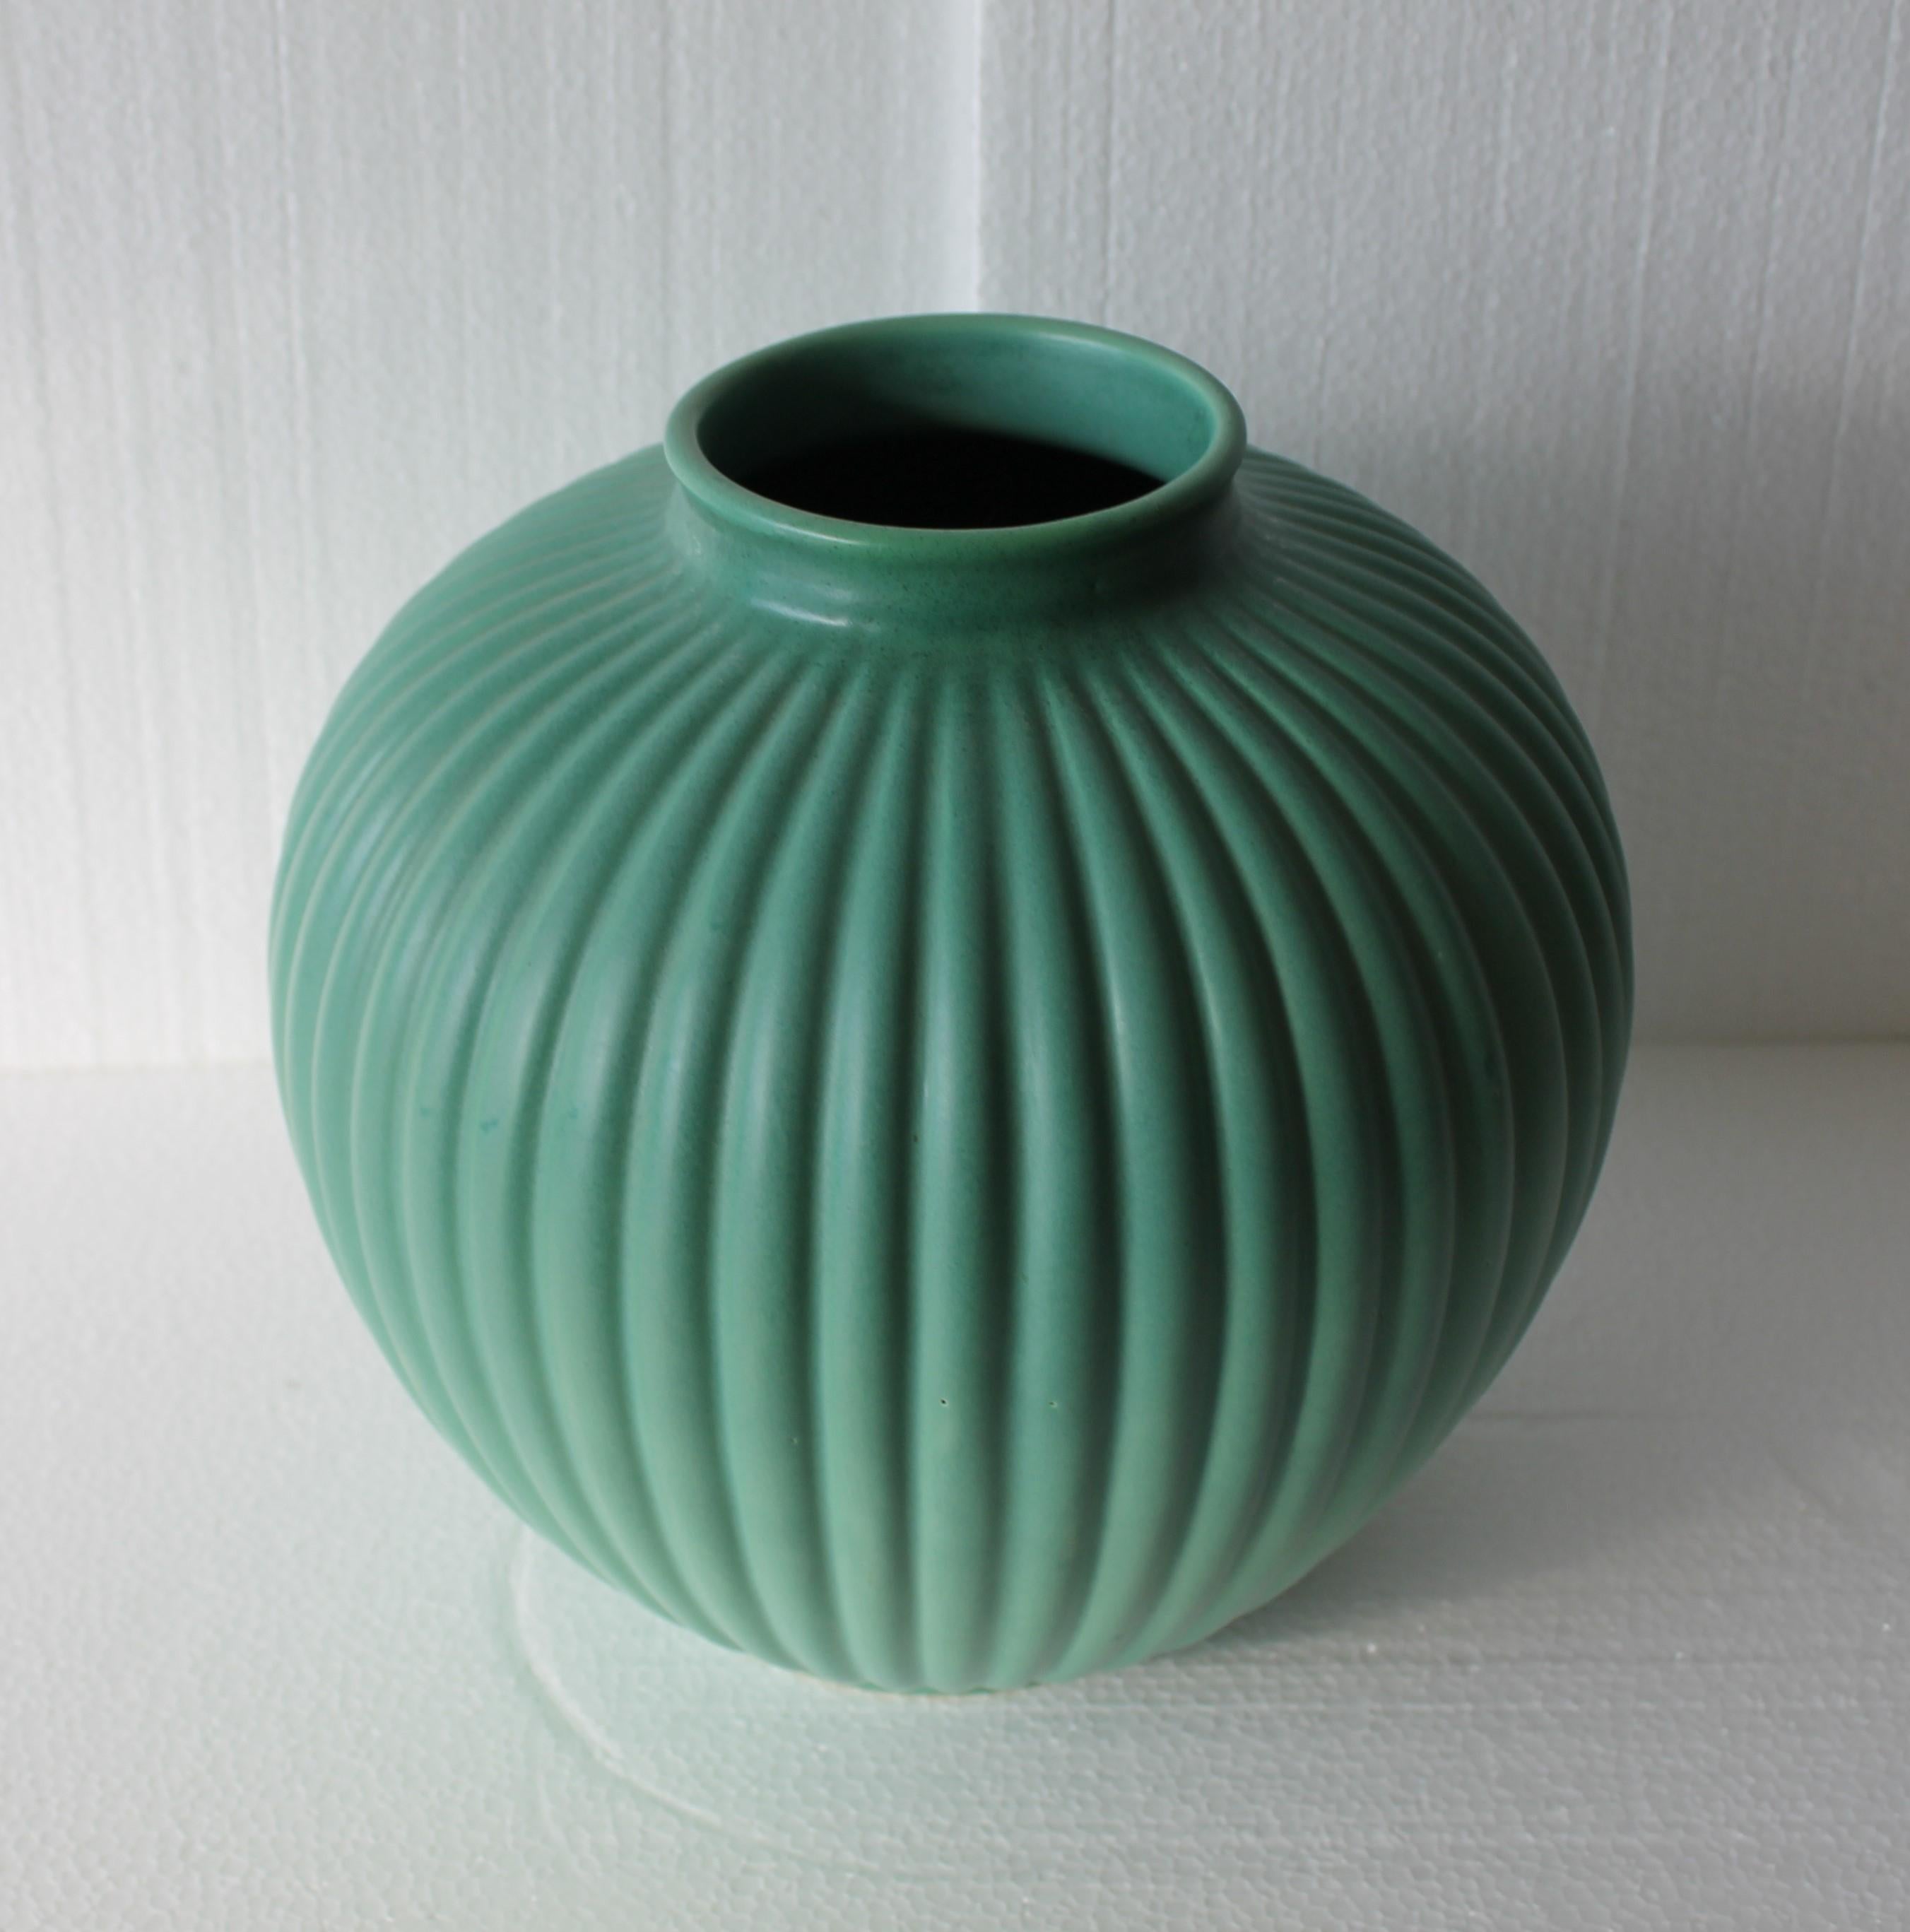 Richard Ginori green ceramic vase by Giovanni Gariboldi, Italy 1950s

Mark on the base: RICHARD GINORI NC Fabbricato in Italia 688